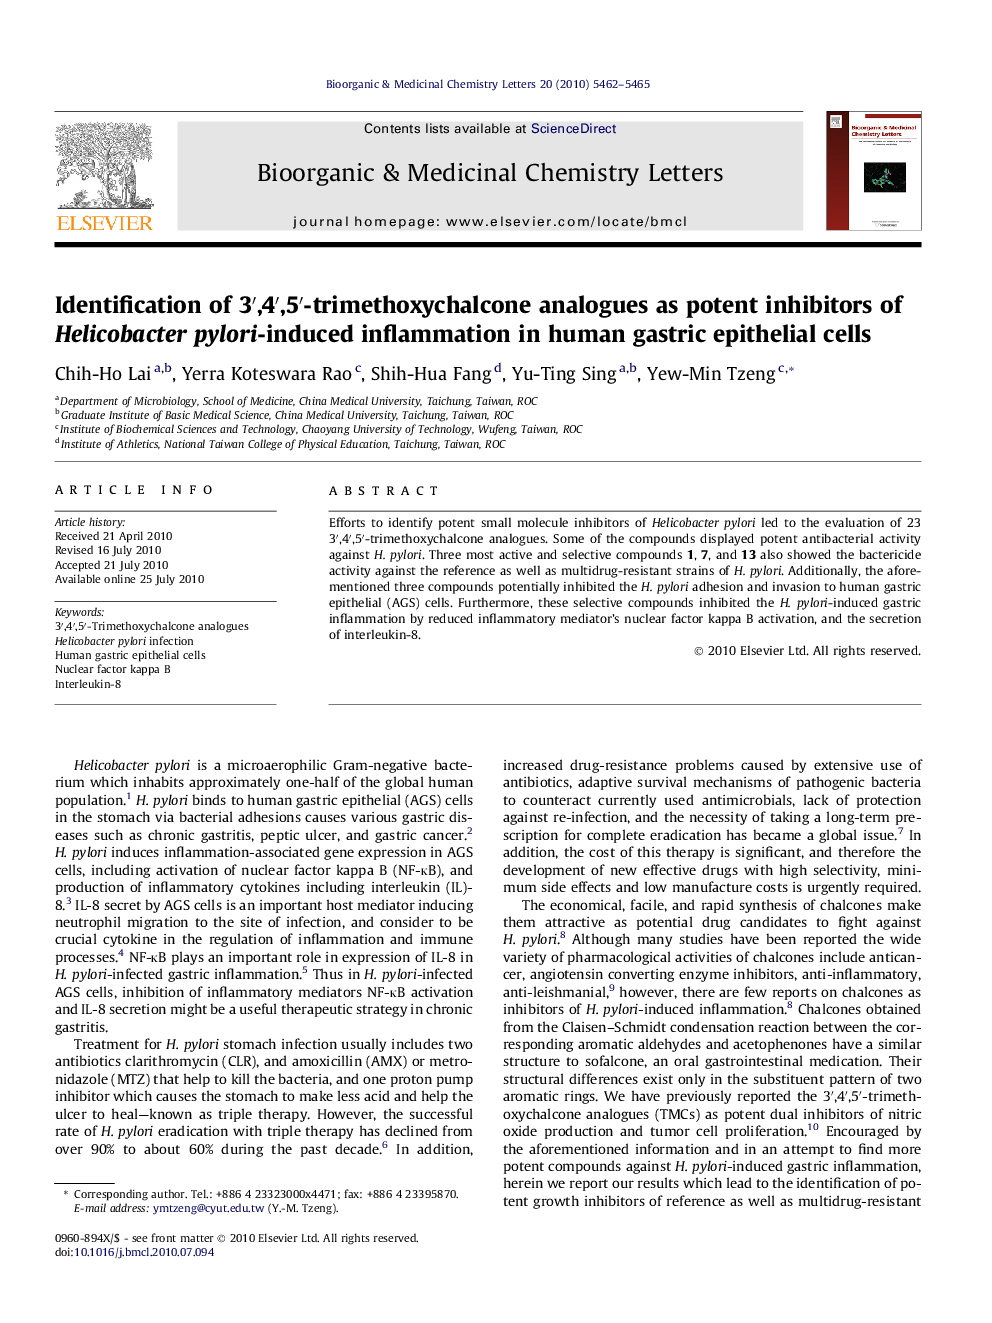 Identification of 3â²,4â²,5â²-trimethoxychalcone analogues as potent inhibitors of Helicobacter pylori-induced inflammation in human gastric epithelial cells